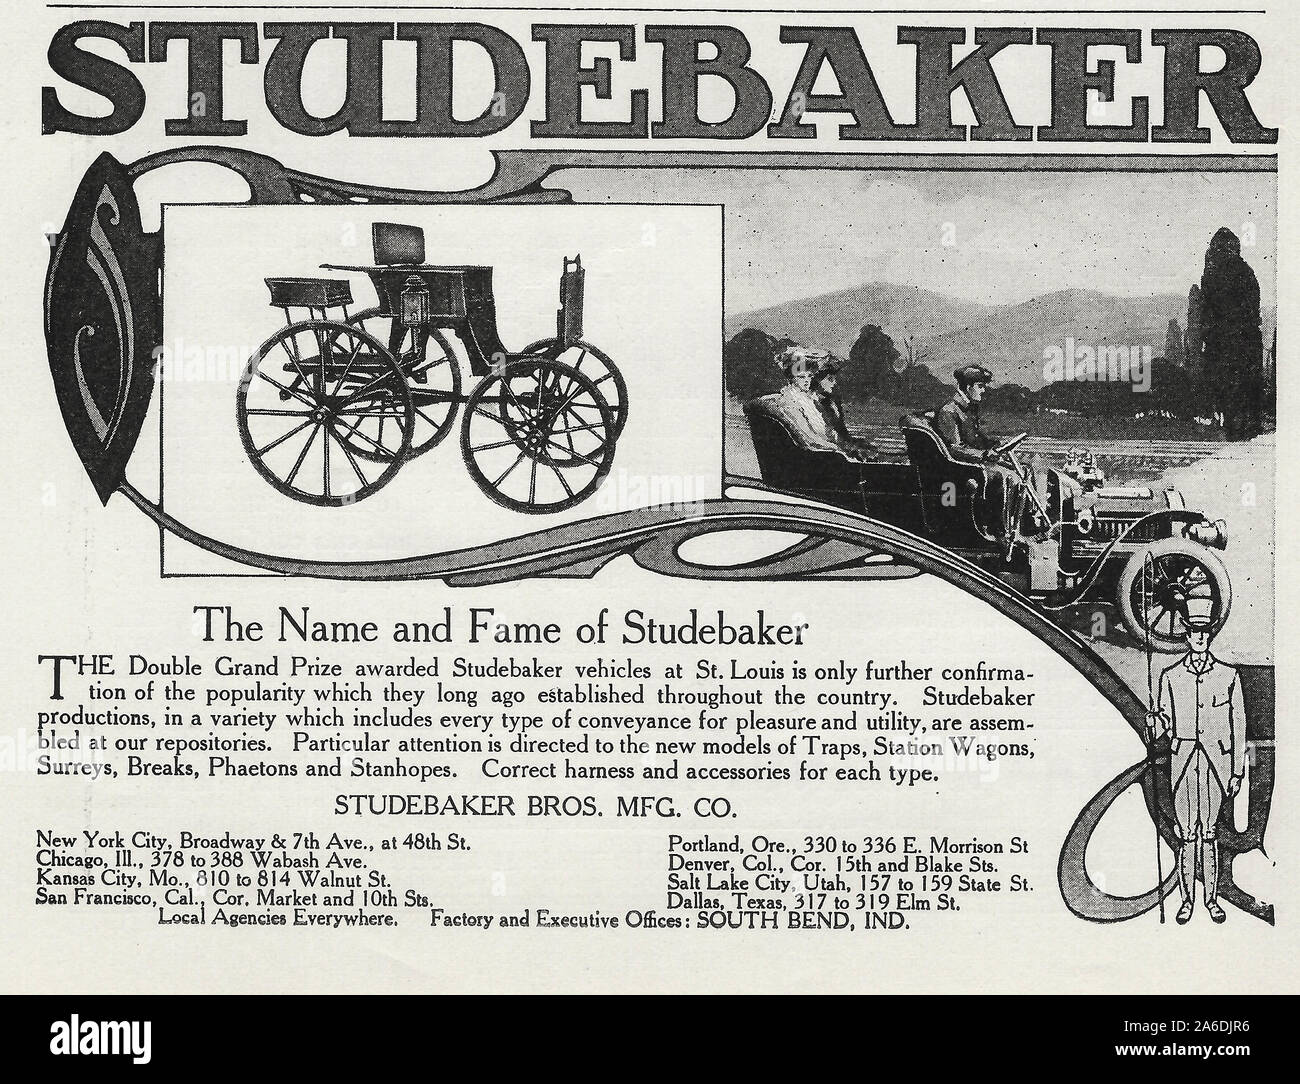 Studebaker advertisement in a magazine, 1905 Stock Photo